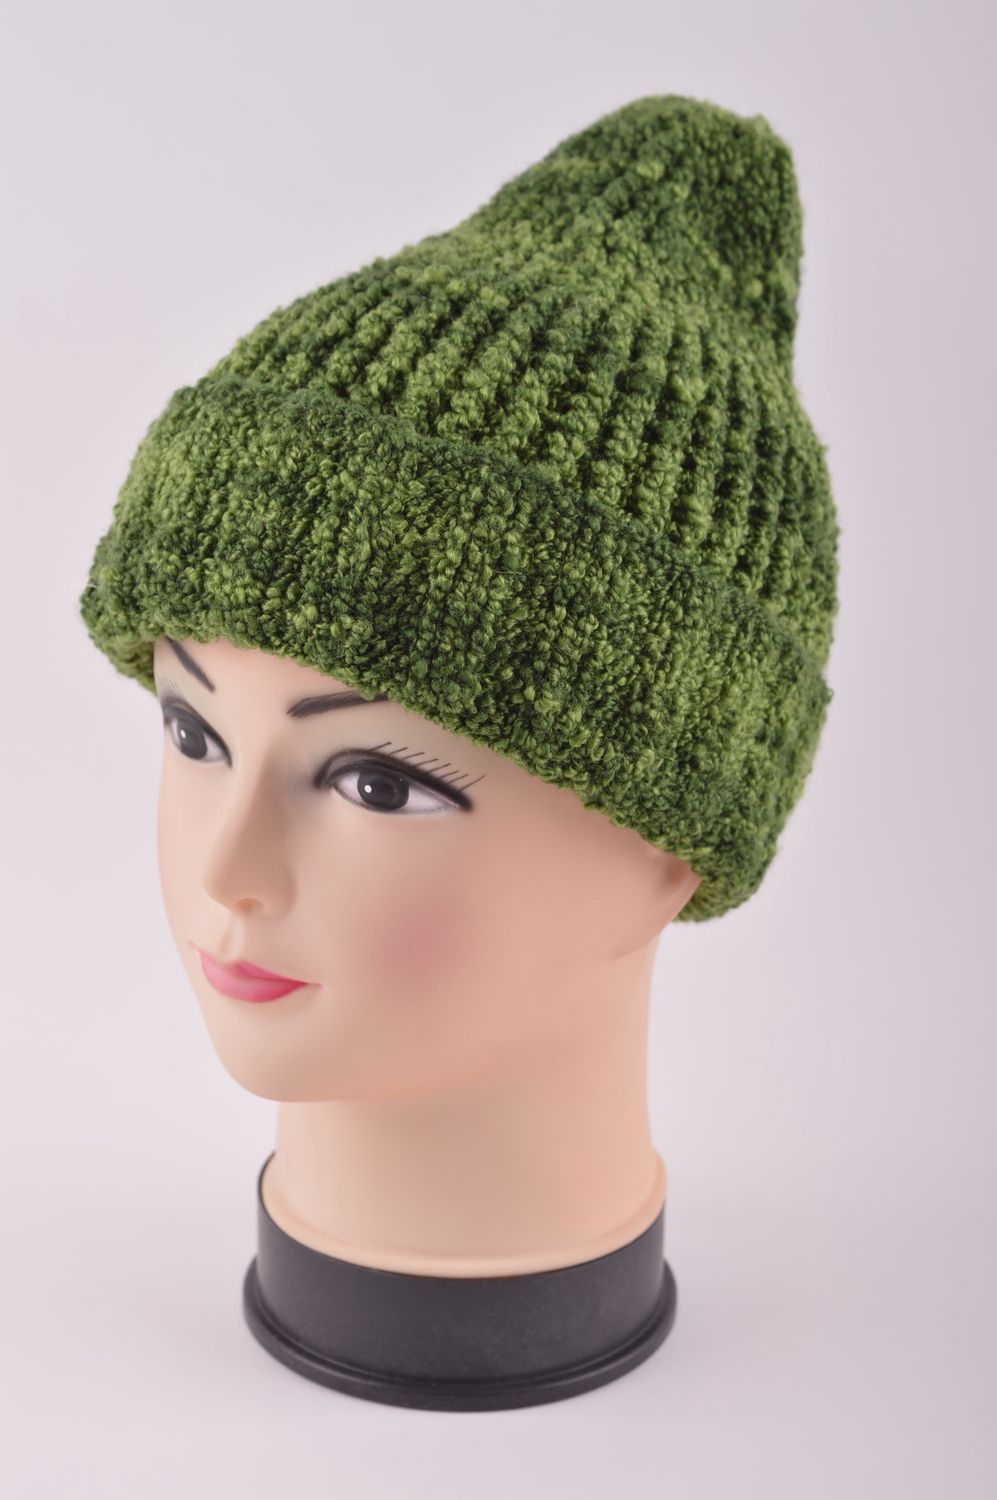 Handmade knitted hat winter hat for women winter hat winter accessories photo 2